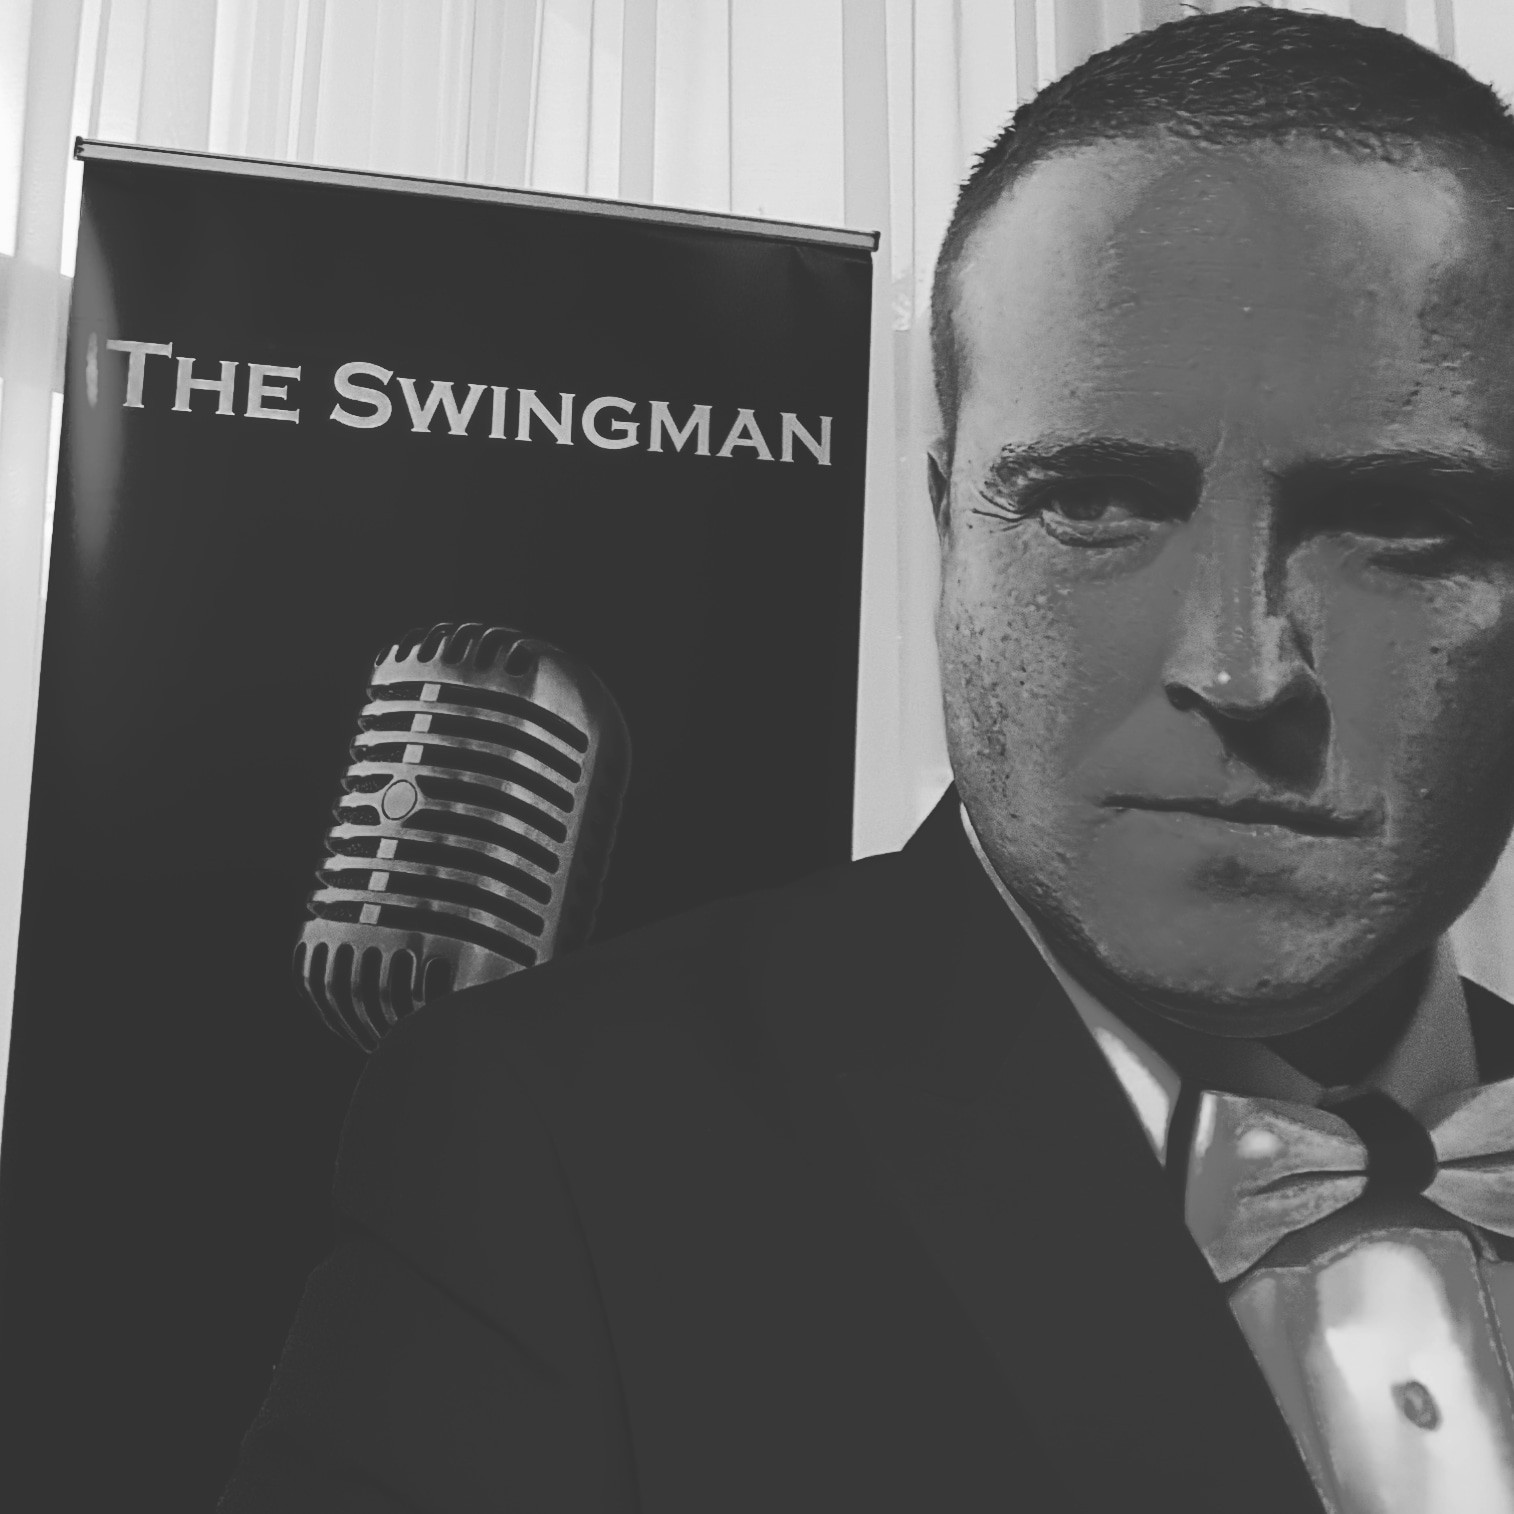 The Swingman